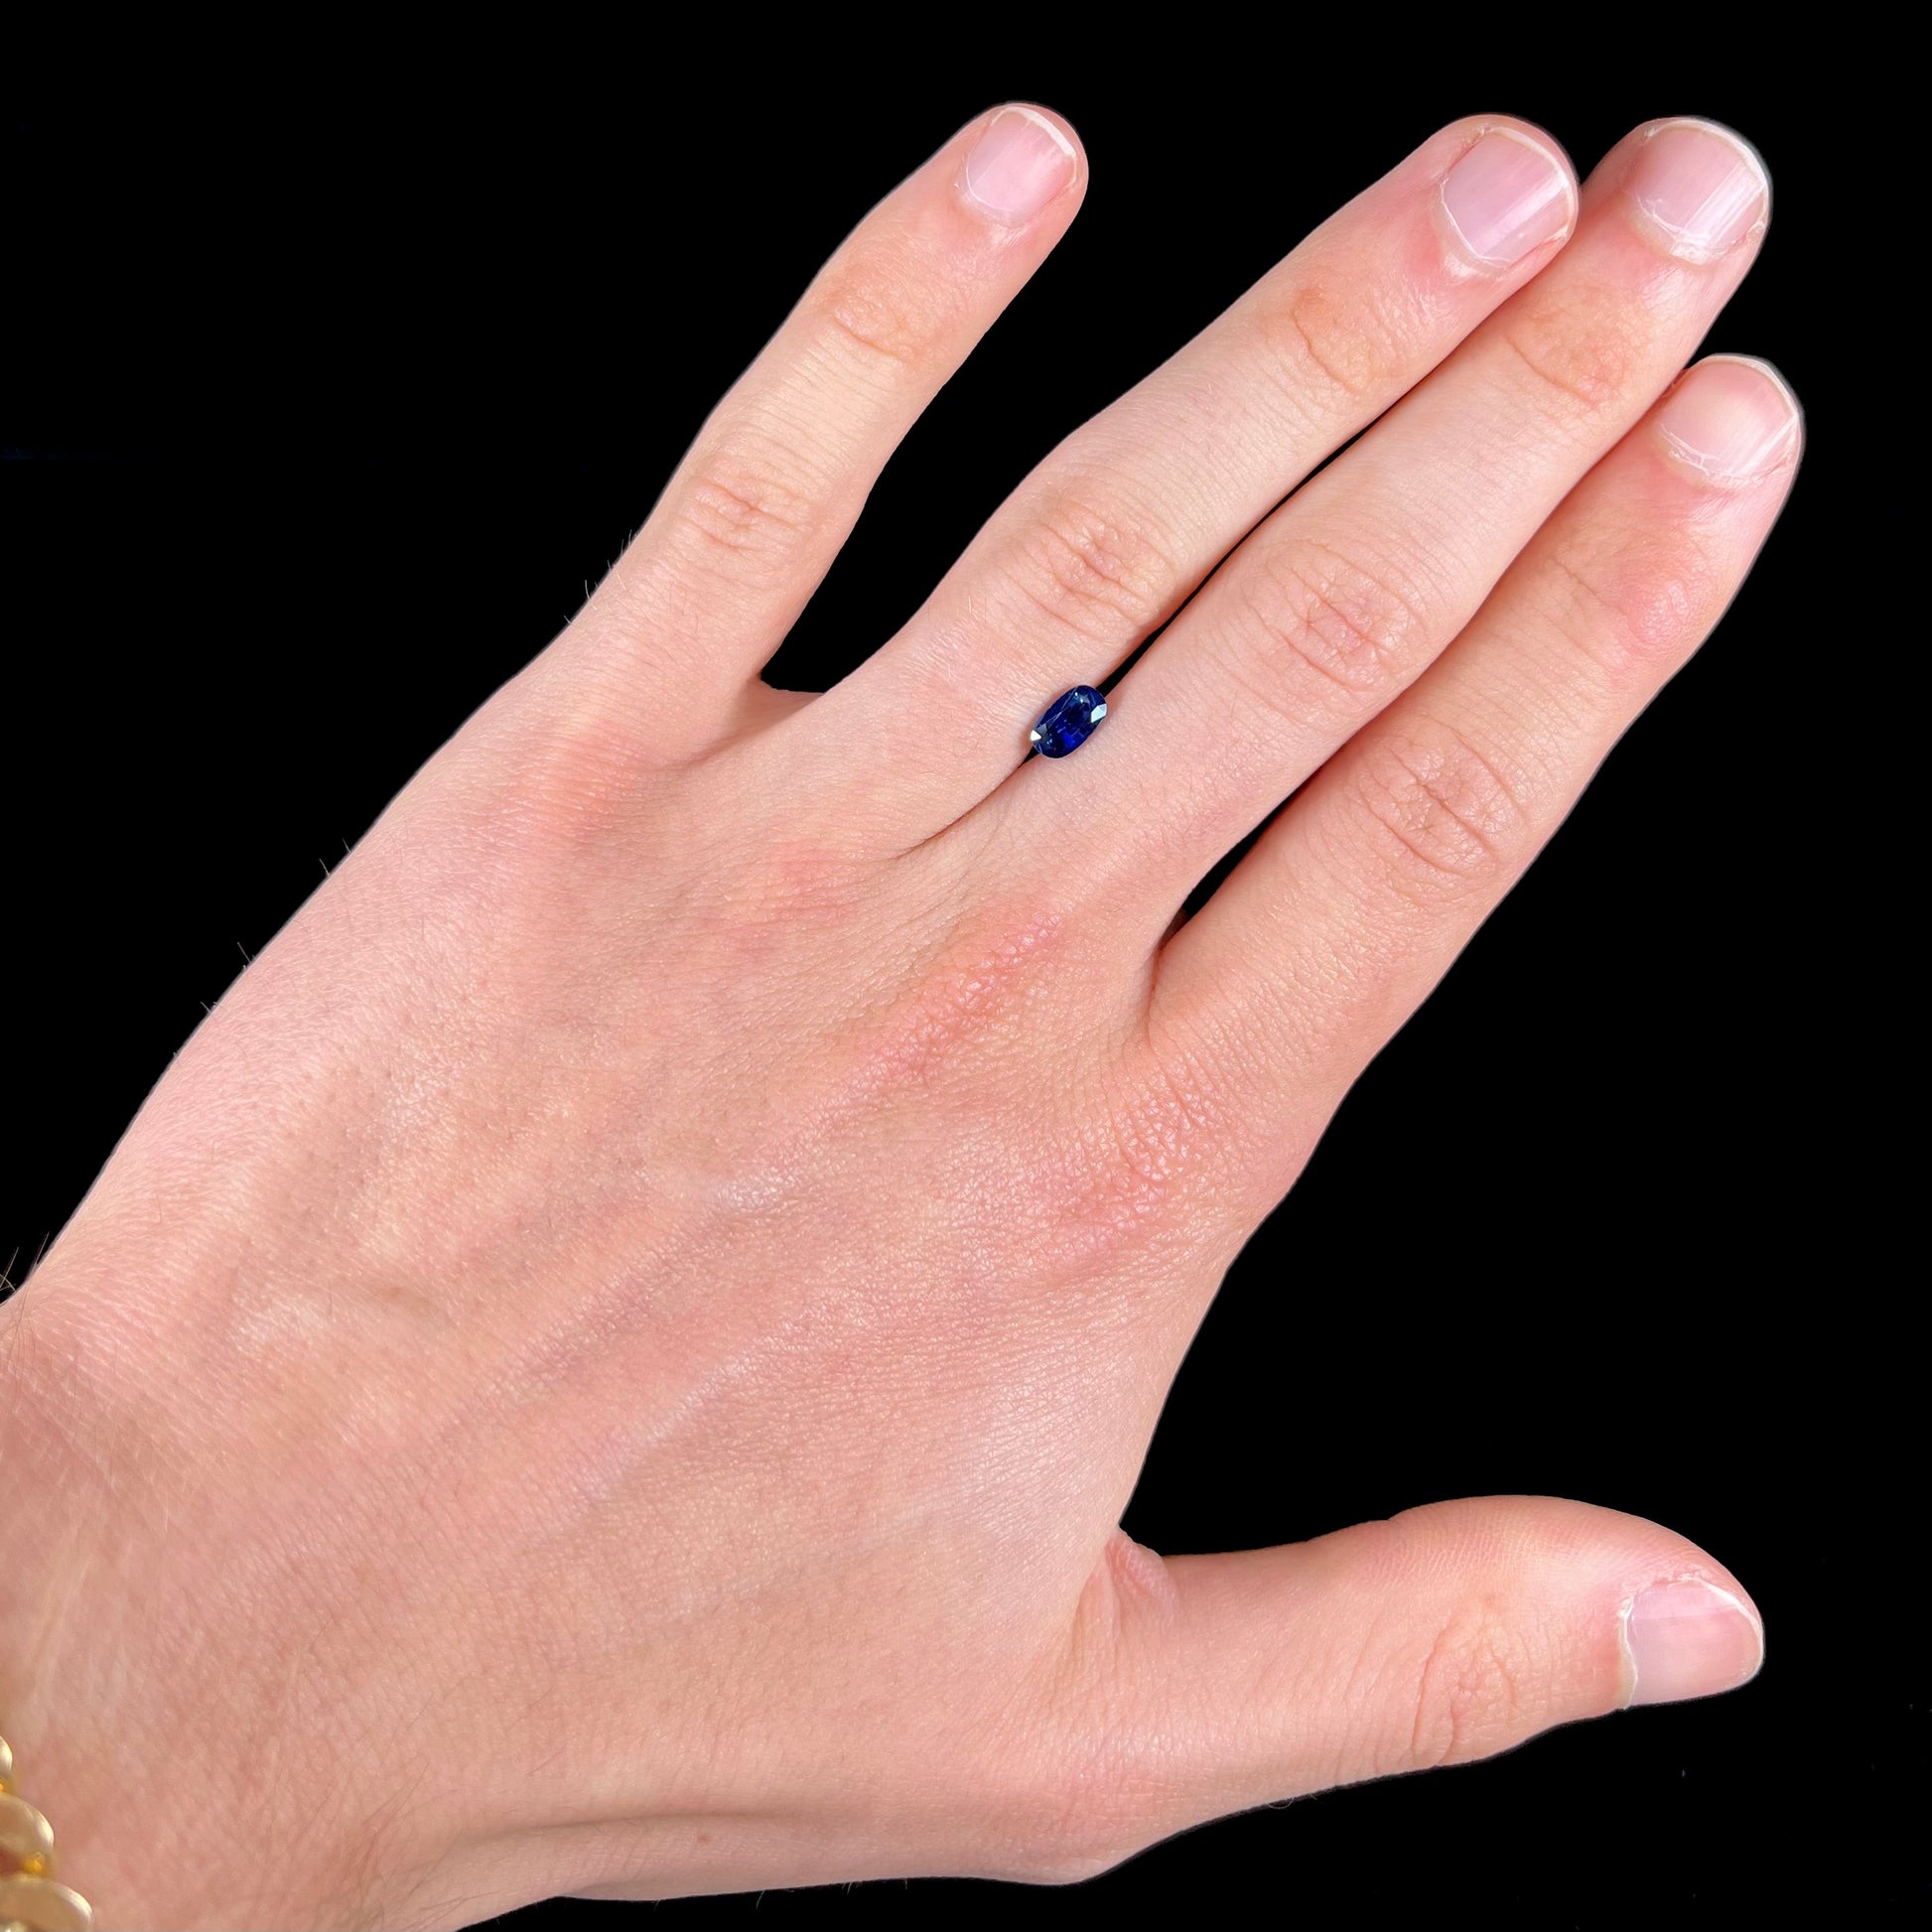 A loose, elongated oval cut blue sapphire gemstone.